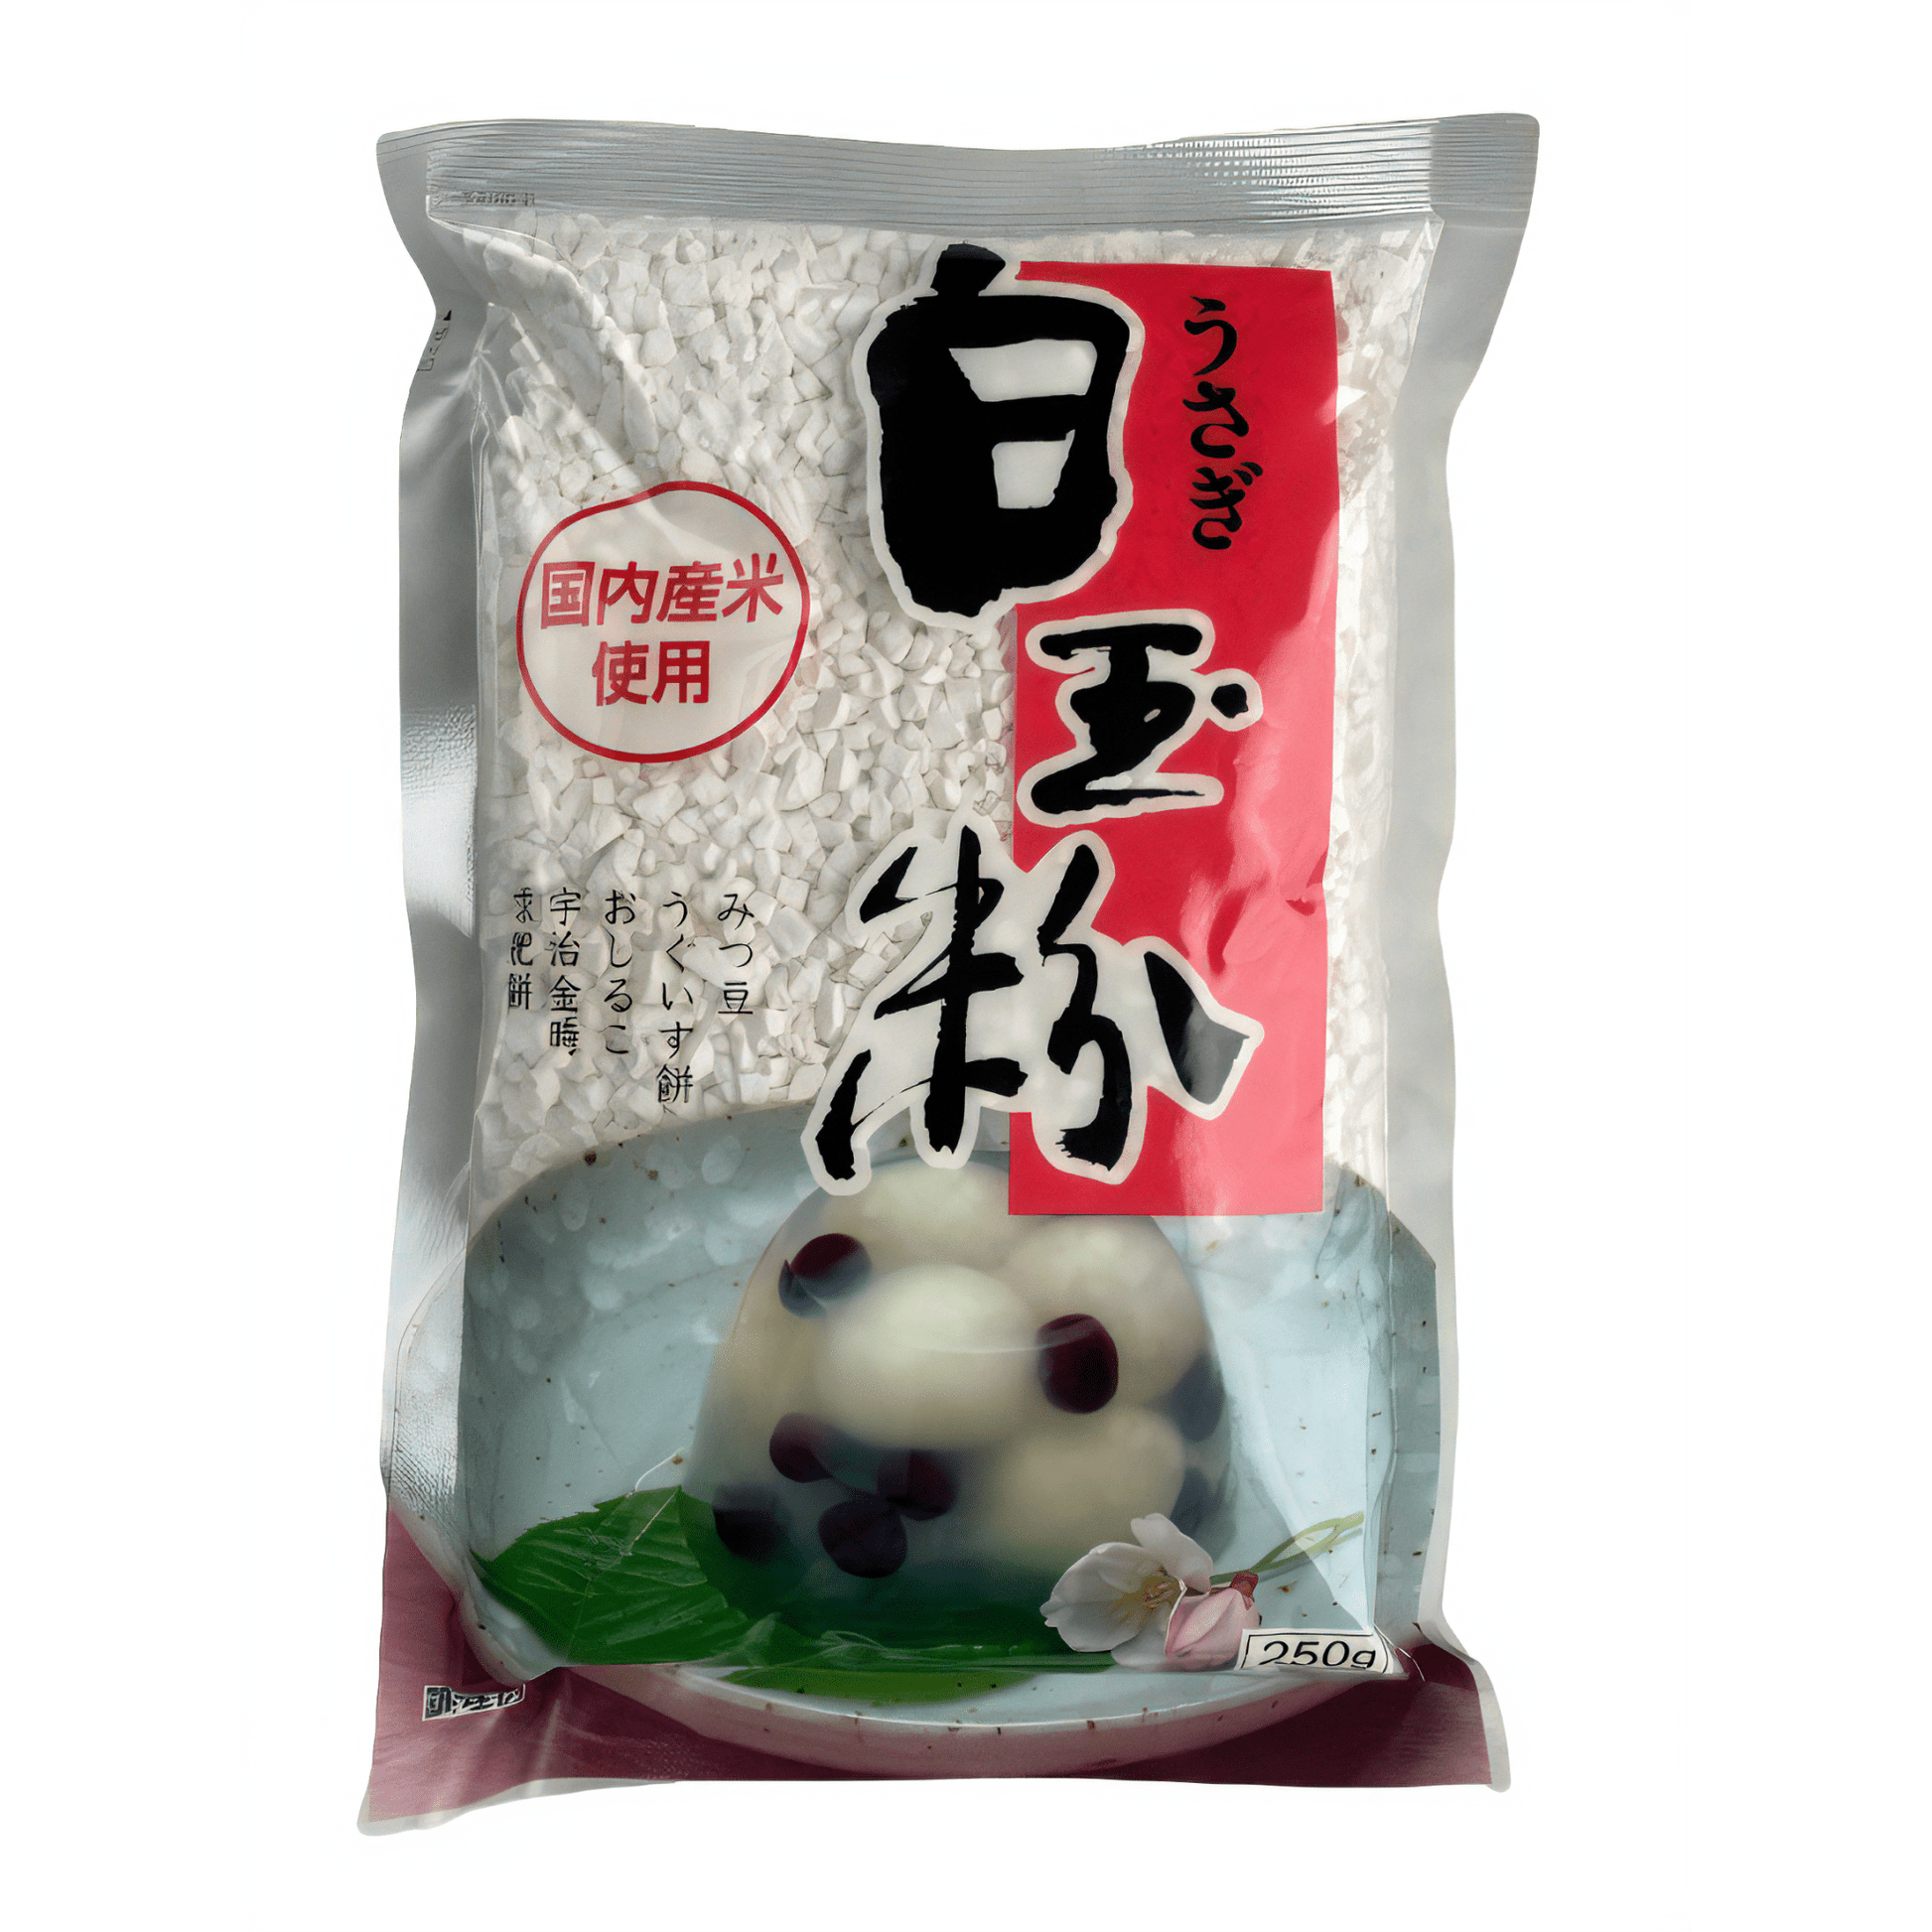 Usagi Shiratamako Glutious Rice Flour 250g / うさぎ 白玉粉 250g - RiceWineShop